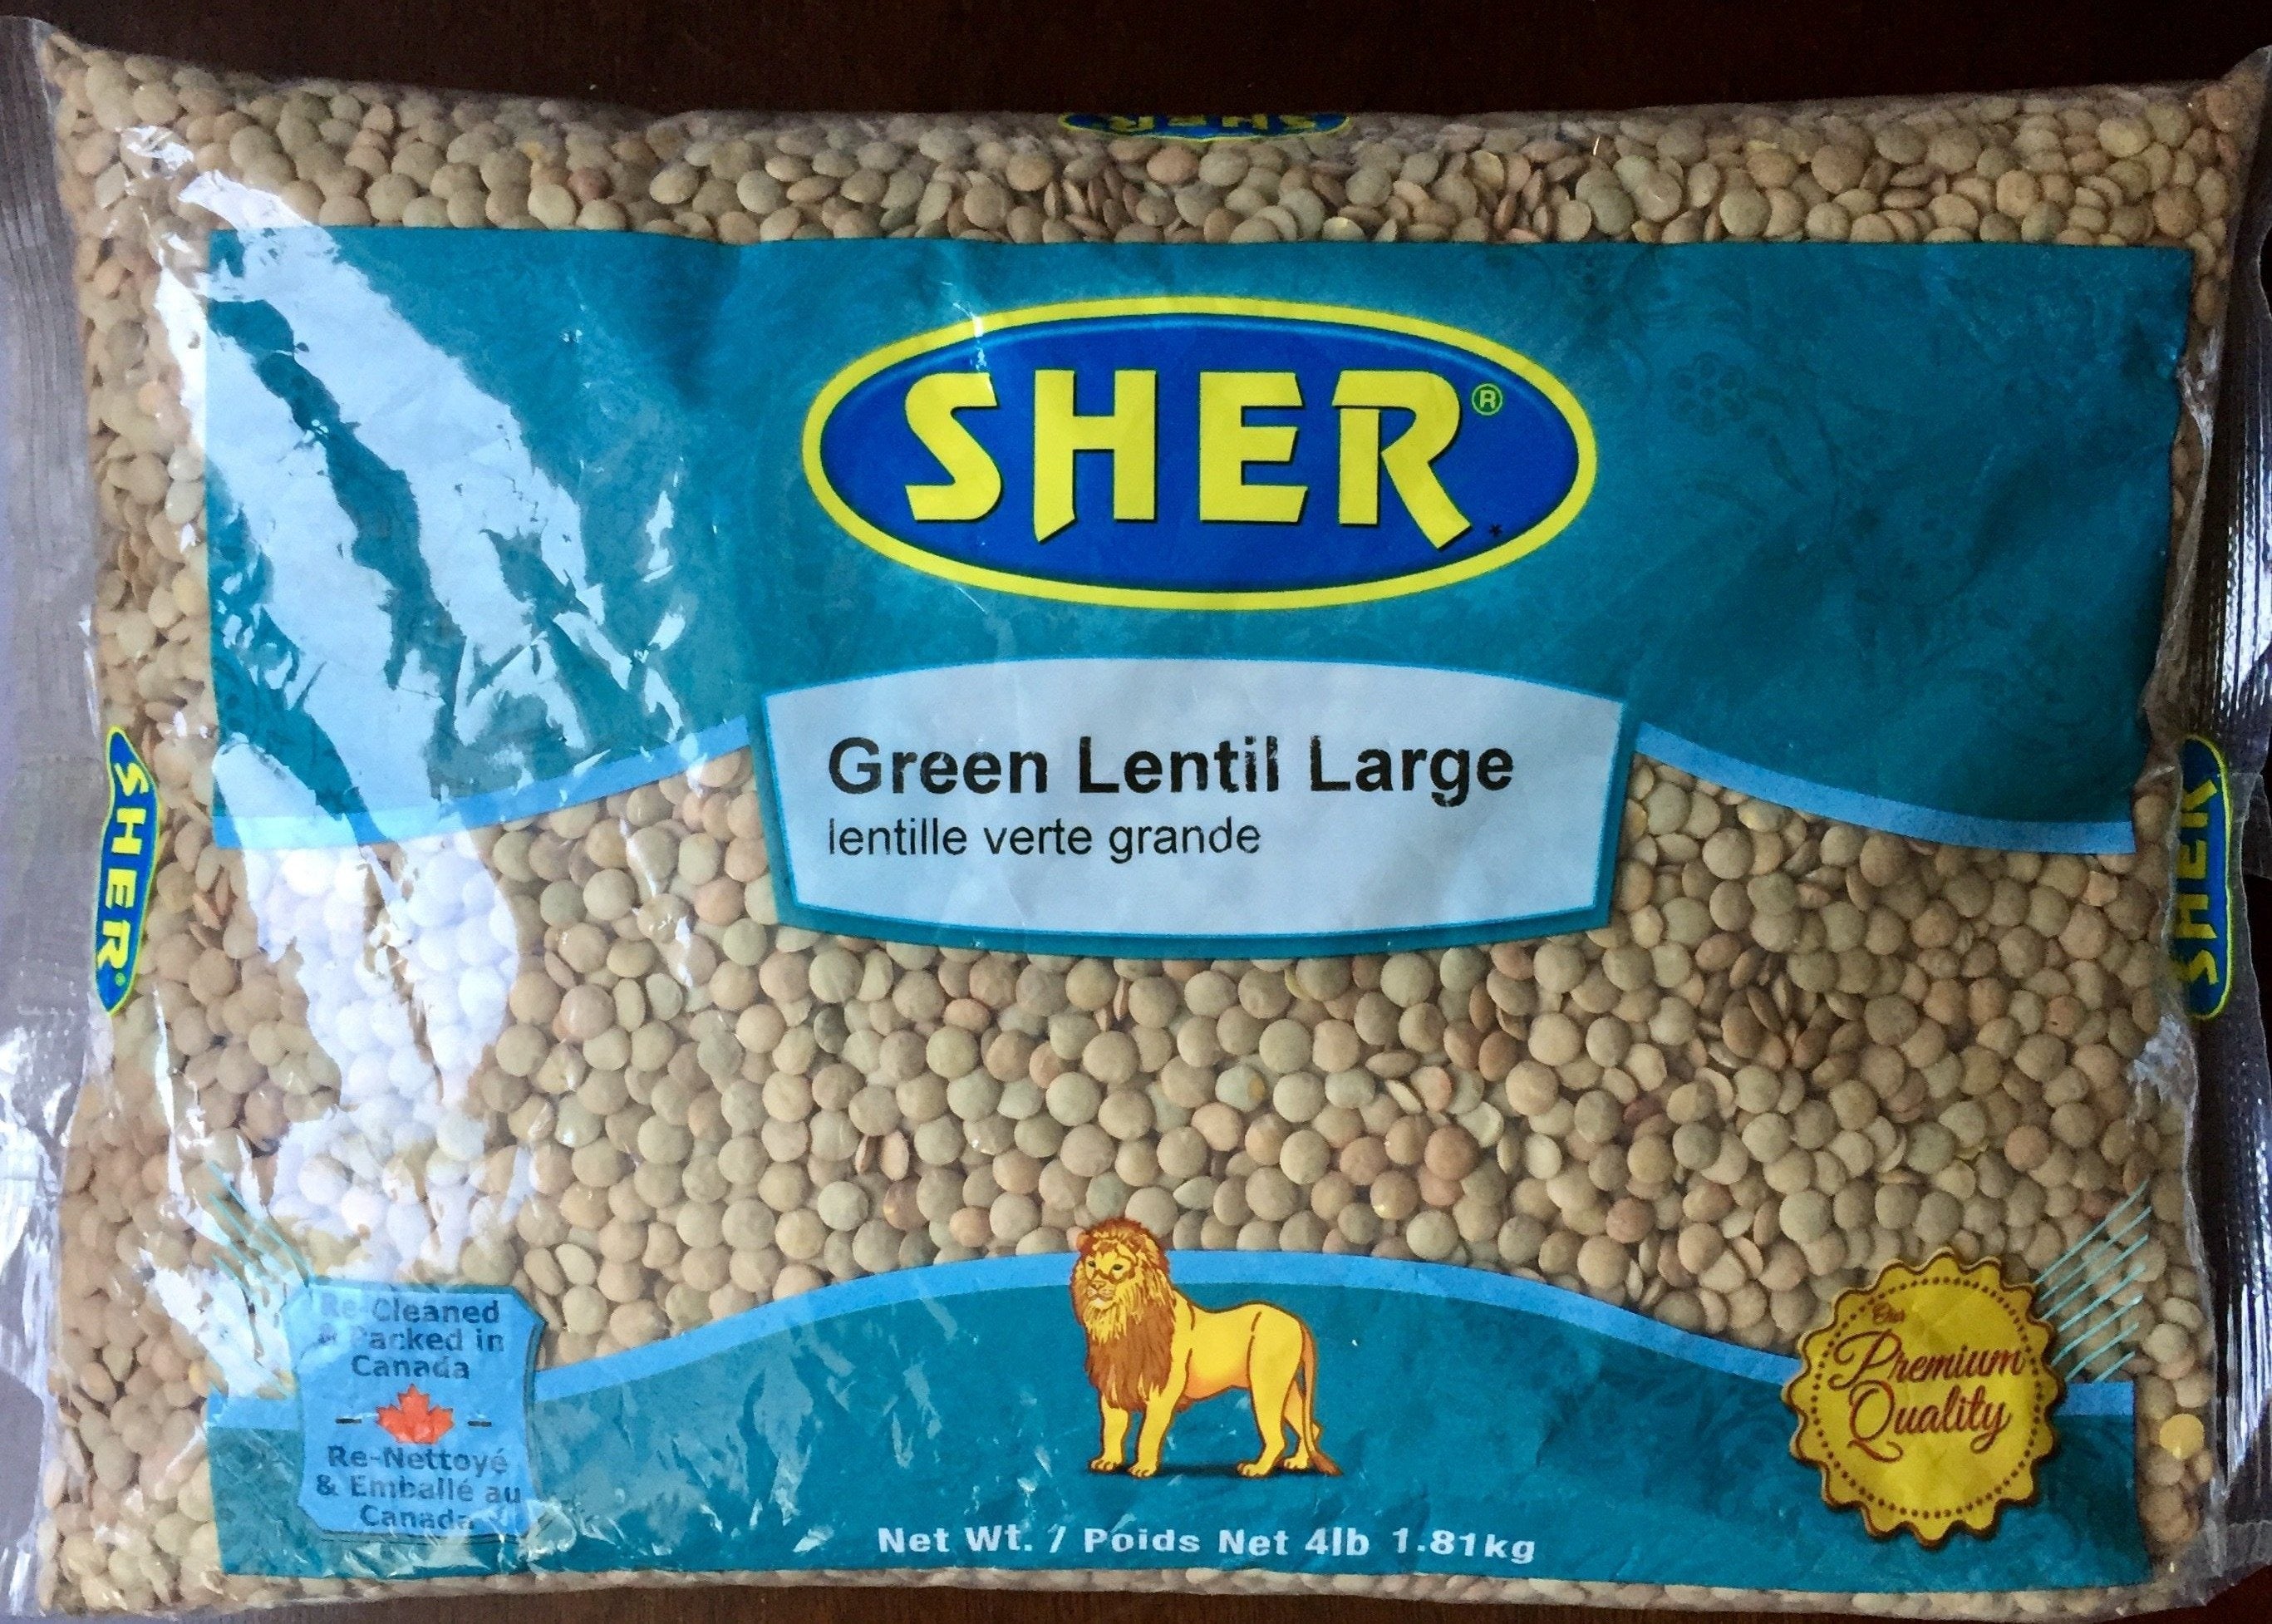 Green Lentil Large - Whole - 2 lb - Sher